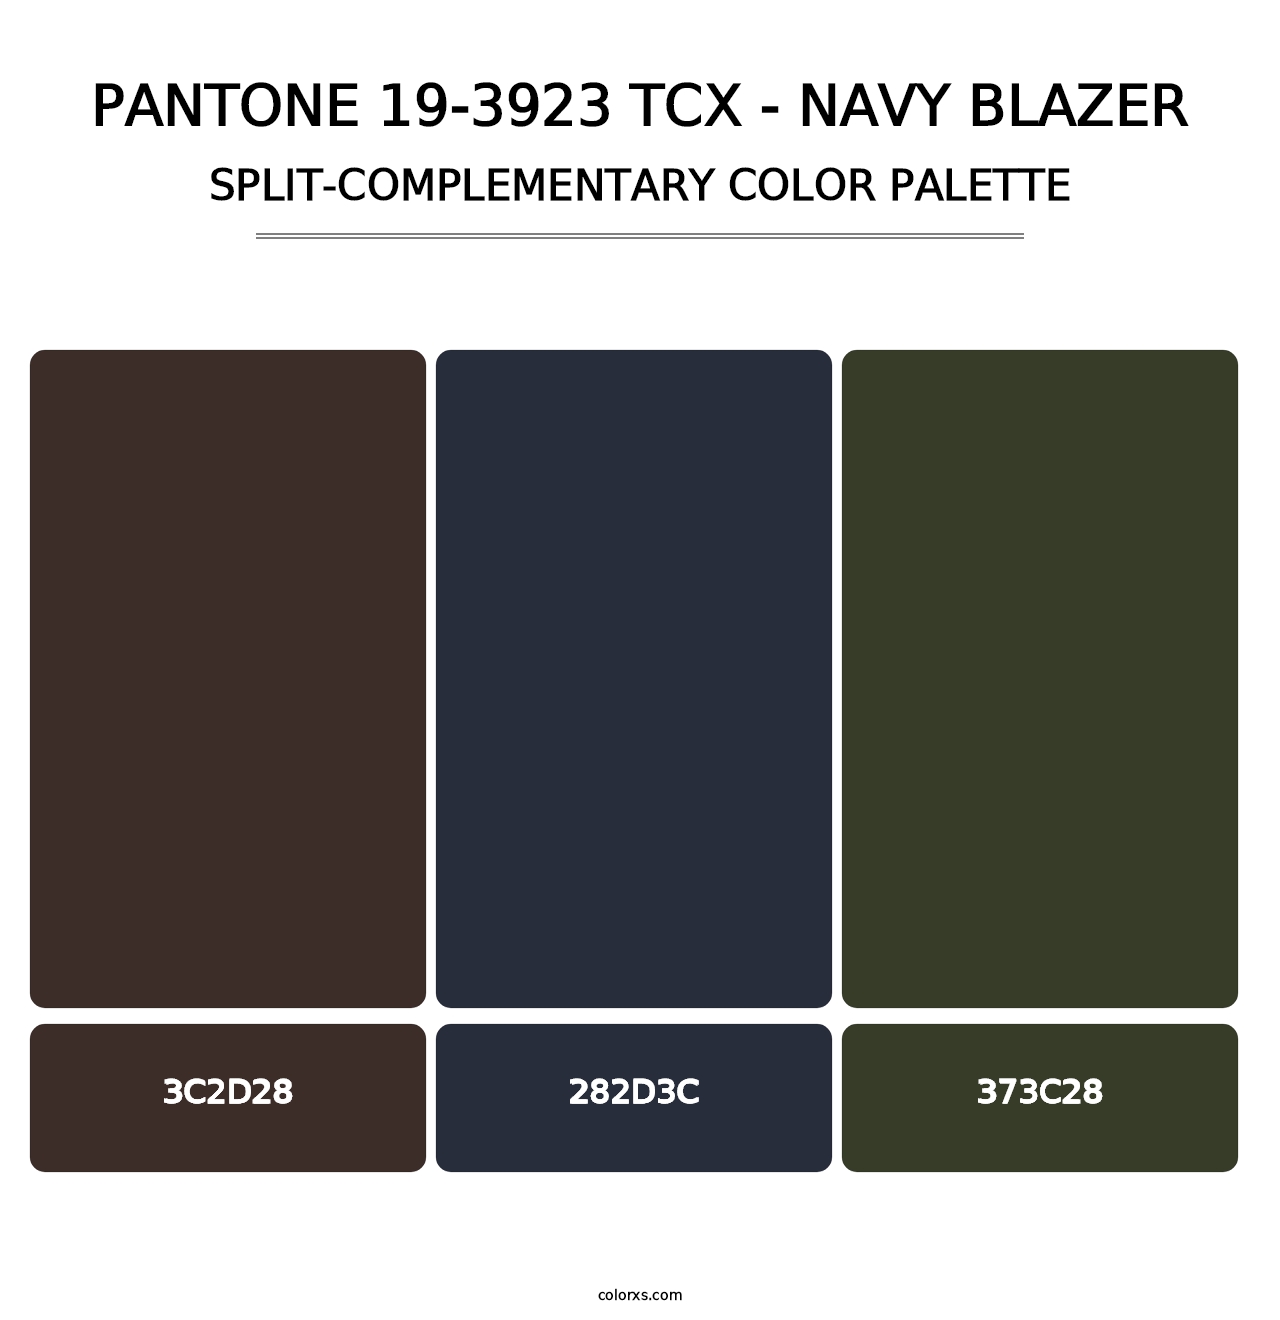 PANTONE 19-3923 TCX - Navy Blazer - Split-Complementary Color Palette